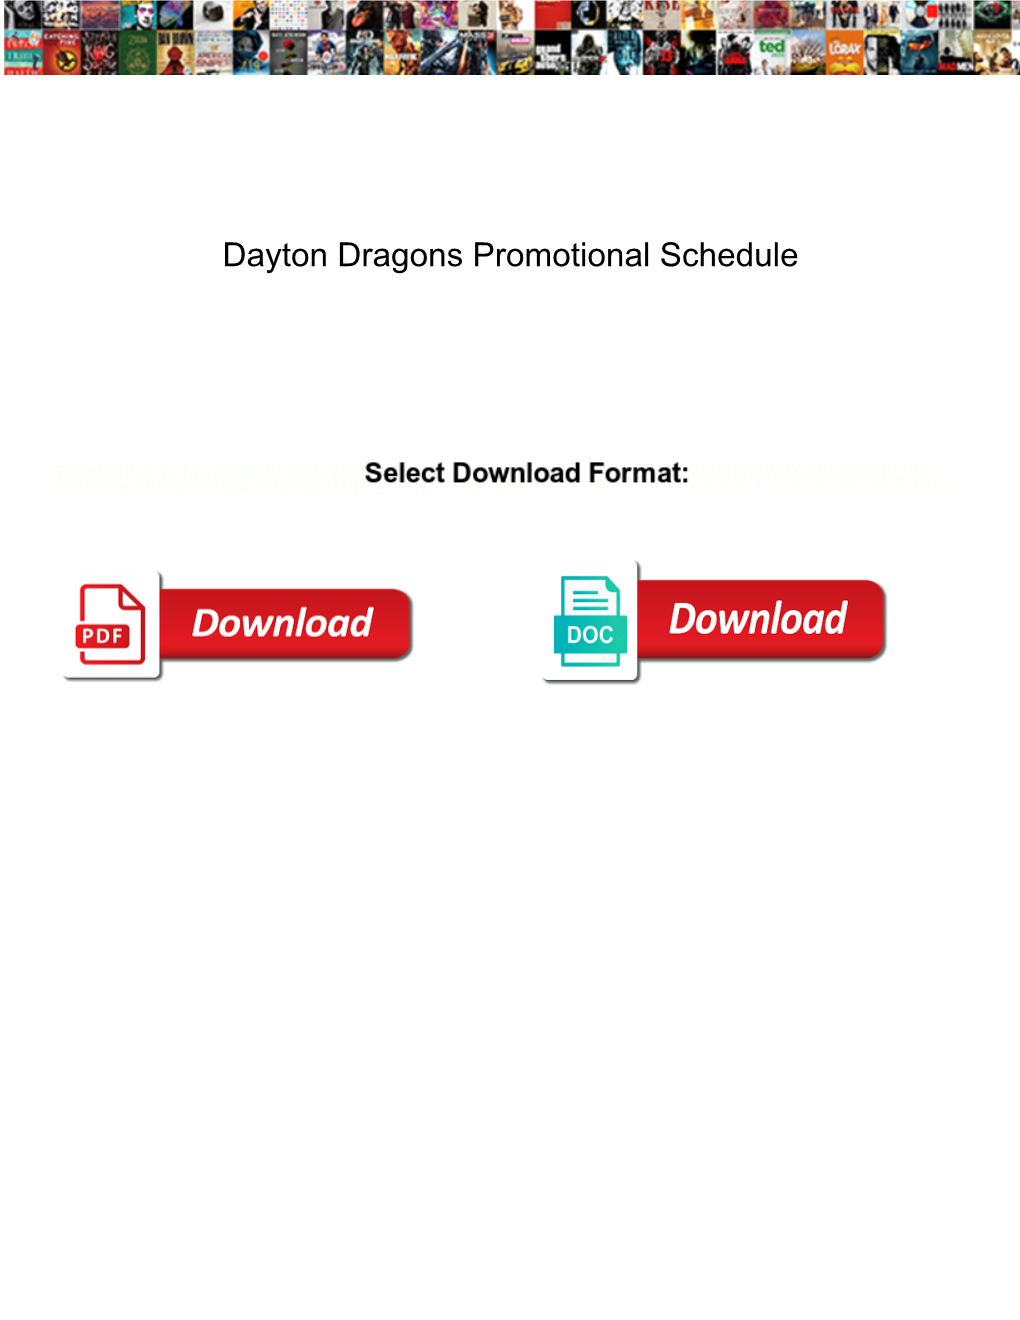 Dayton Dragons Promotional Schedule